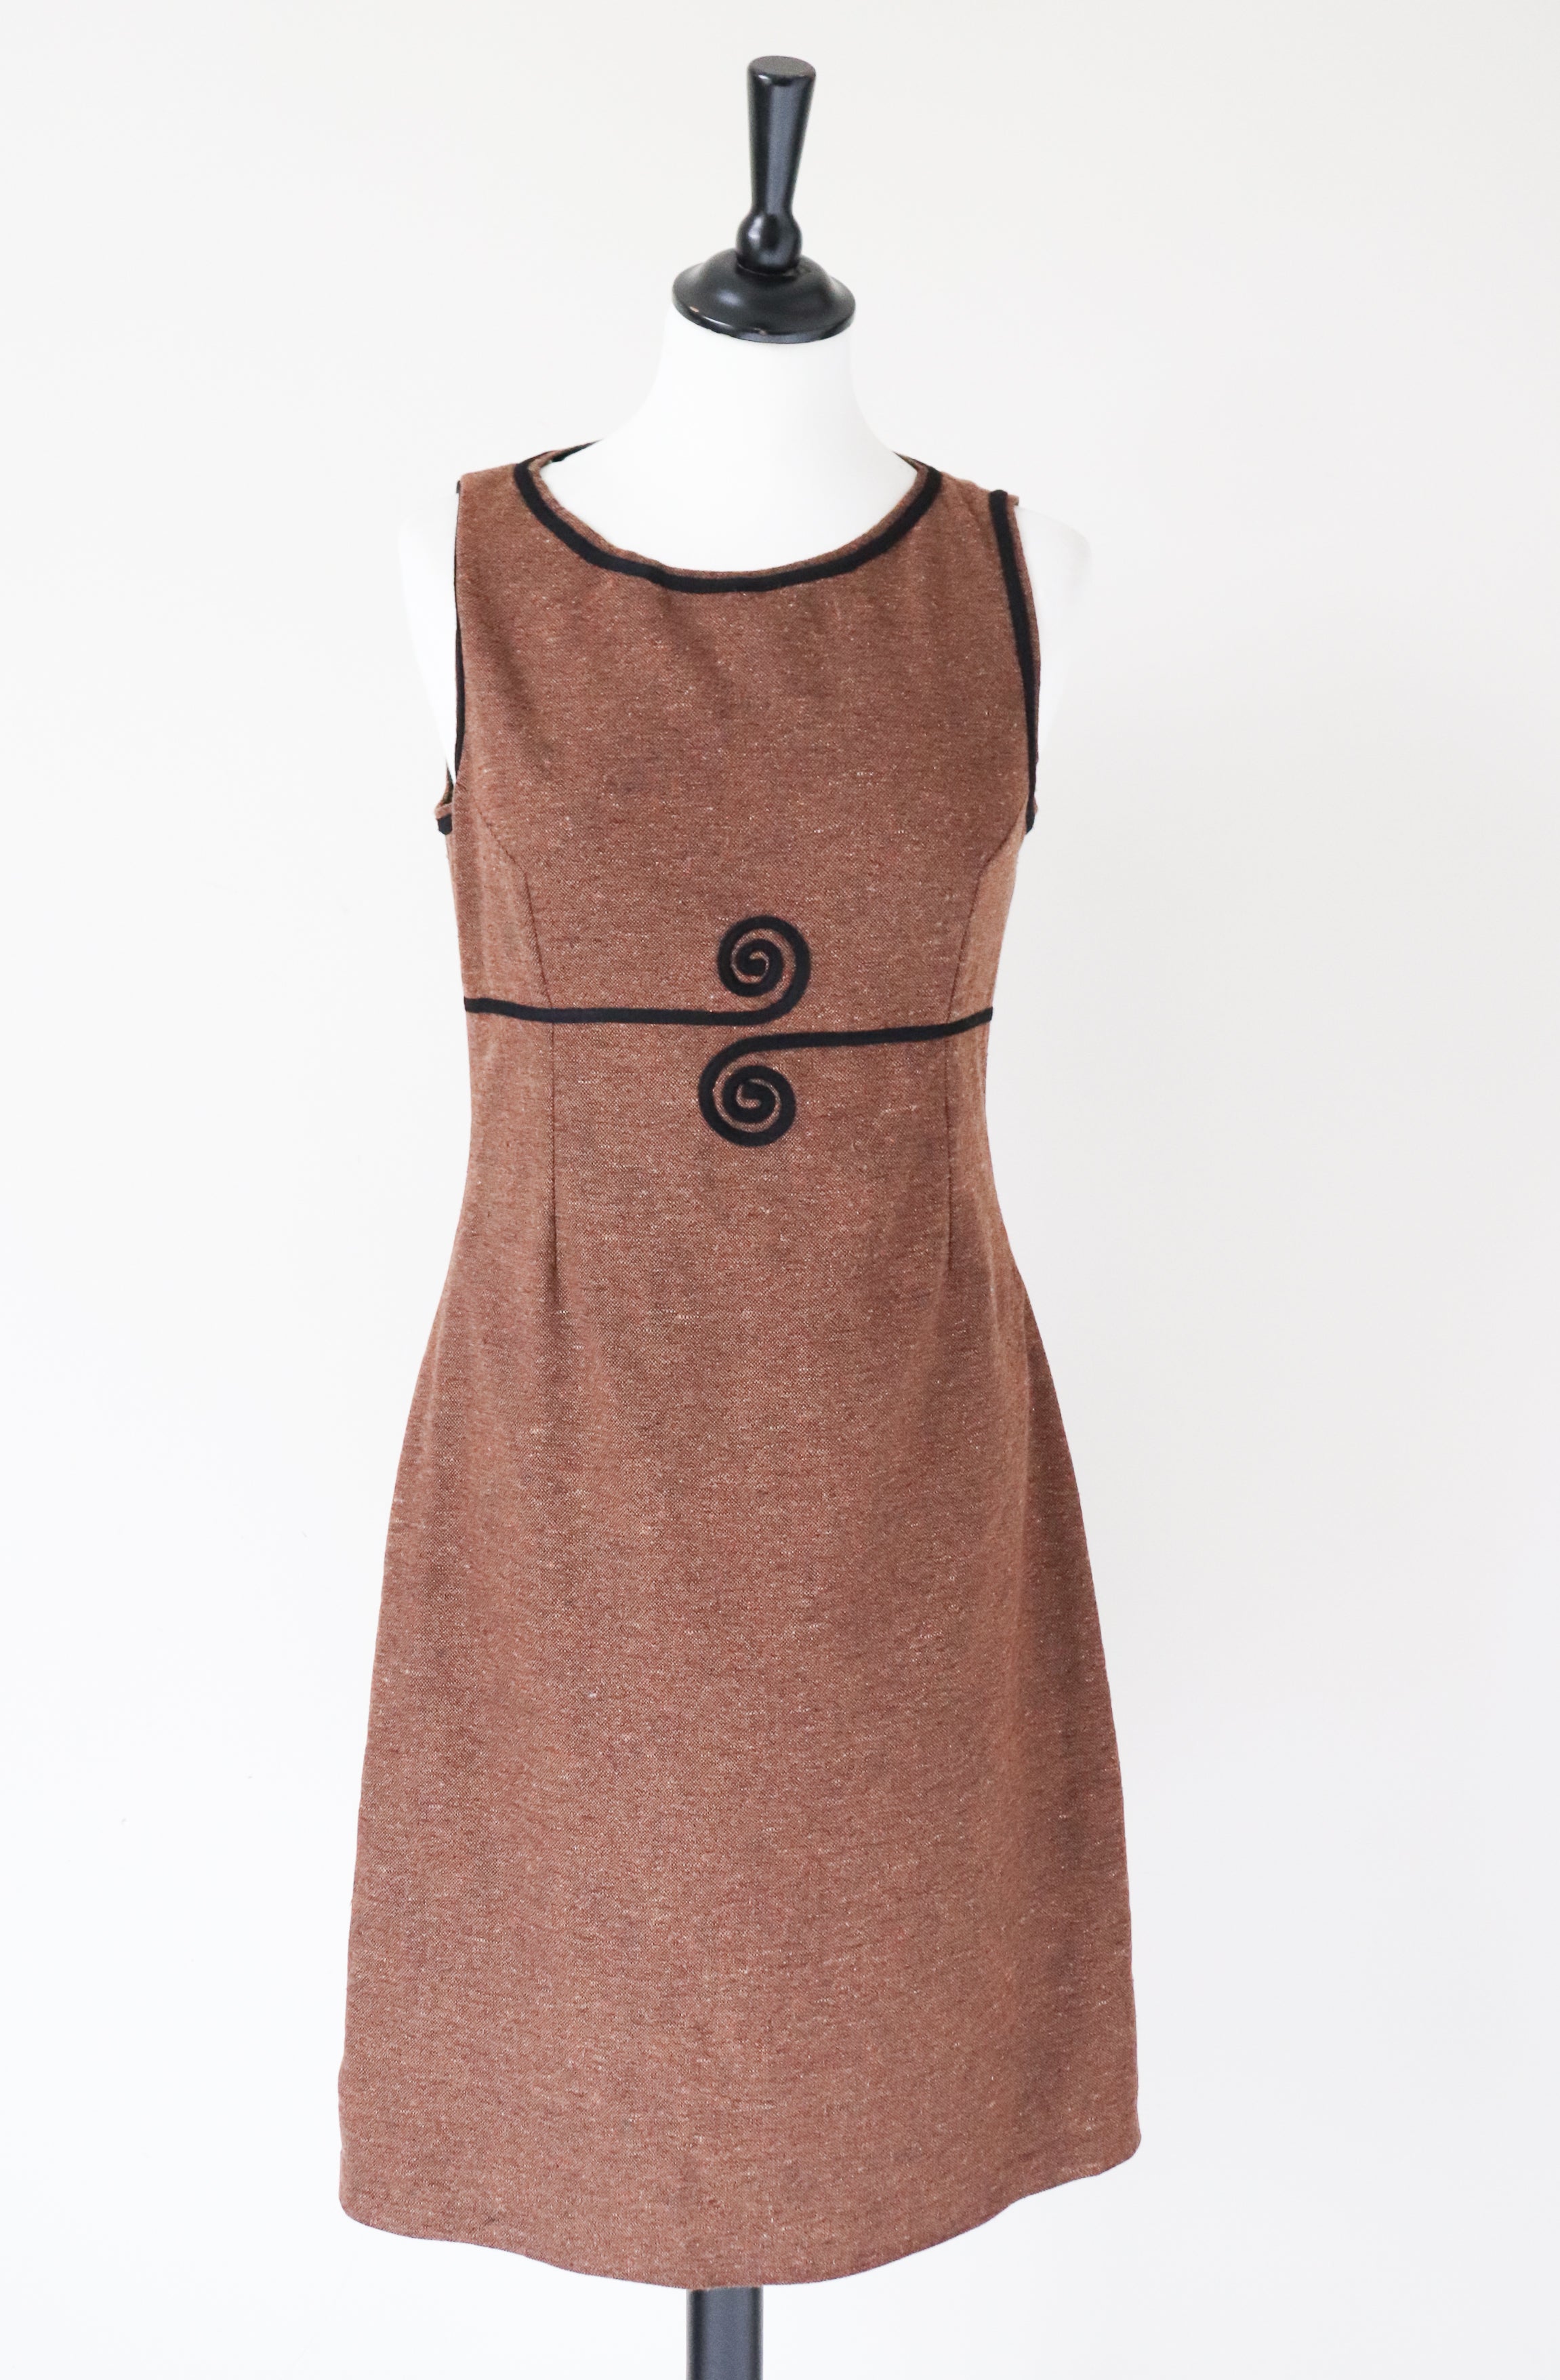 Vintage Tweed Brown Shift Dress - 1960s Style - Empire Line -  S / UK 10